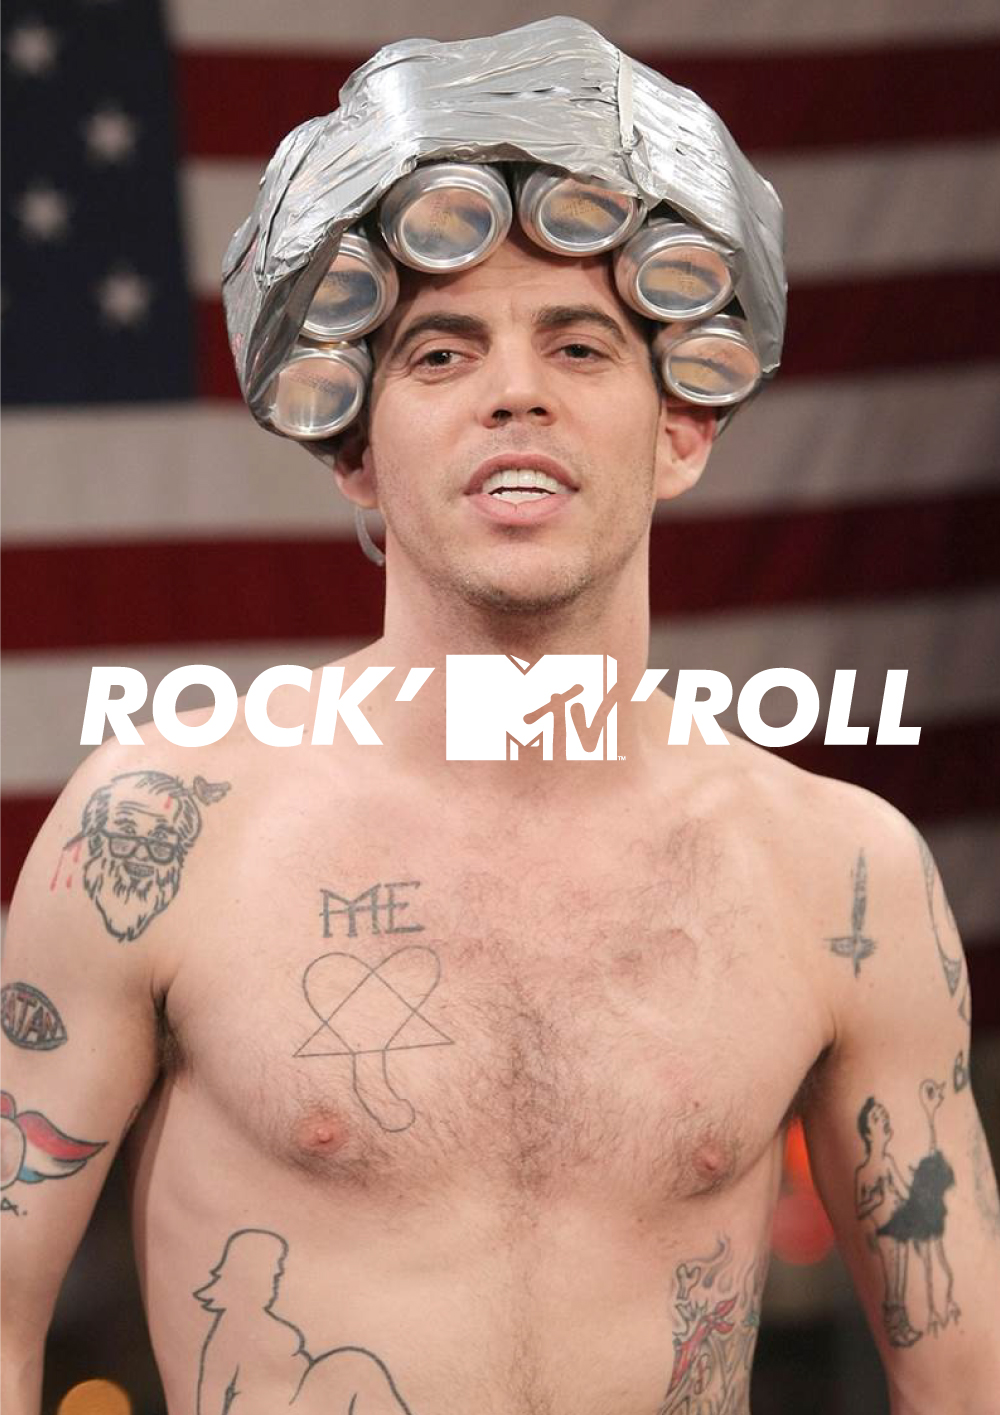 YO CLAS! MTV IMTV brand campaign content rockmroll